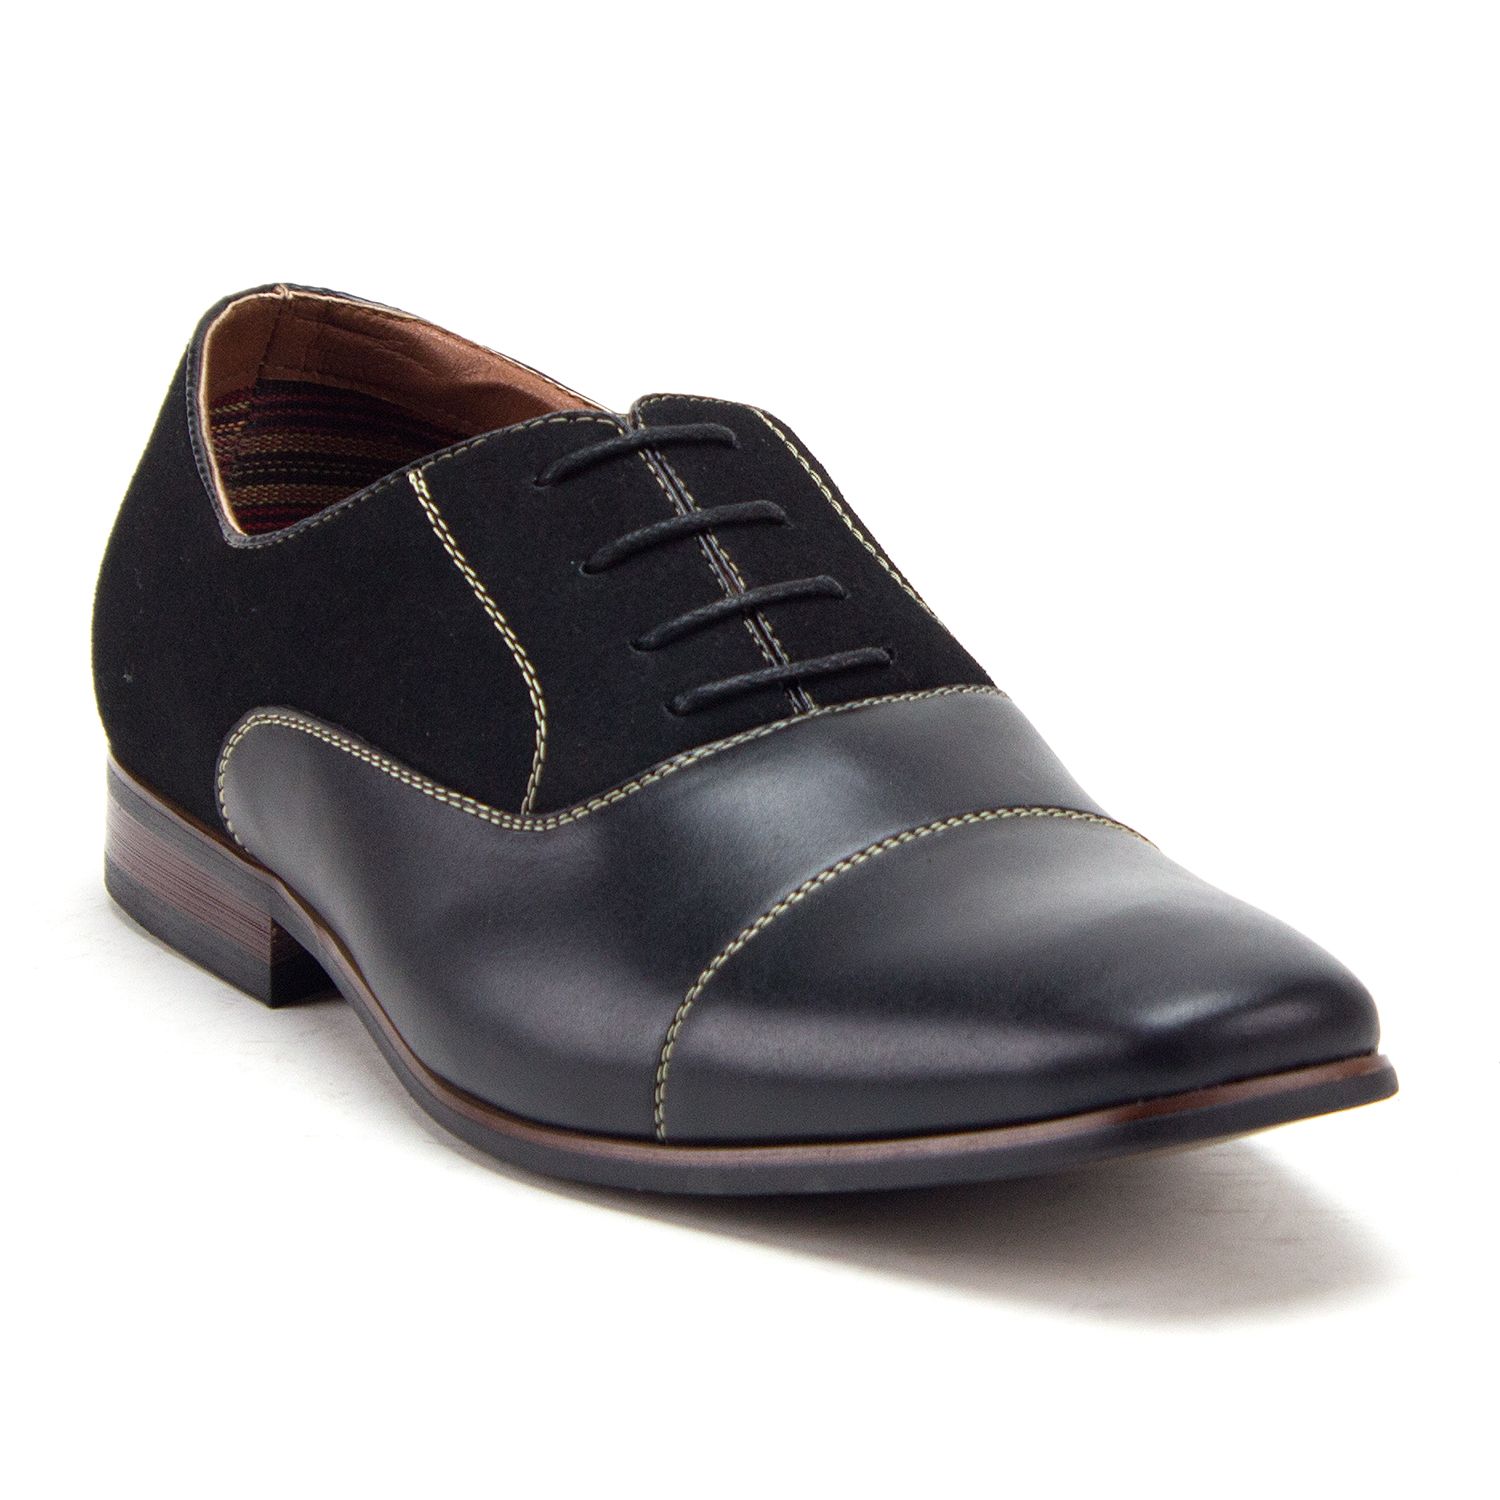 Men's 20617 Cap Toe Derby Oxfords Lace Up Casual Dress Shoes, Black, 9 - image 1 of 4